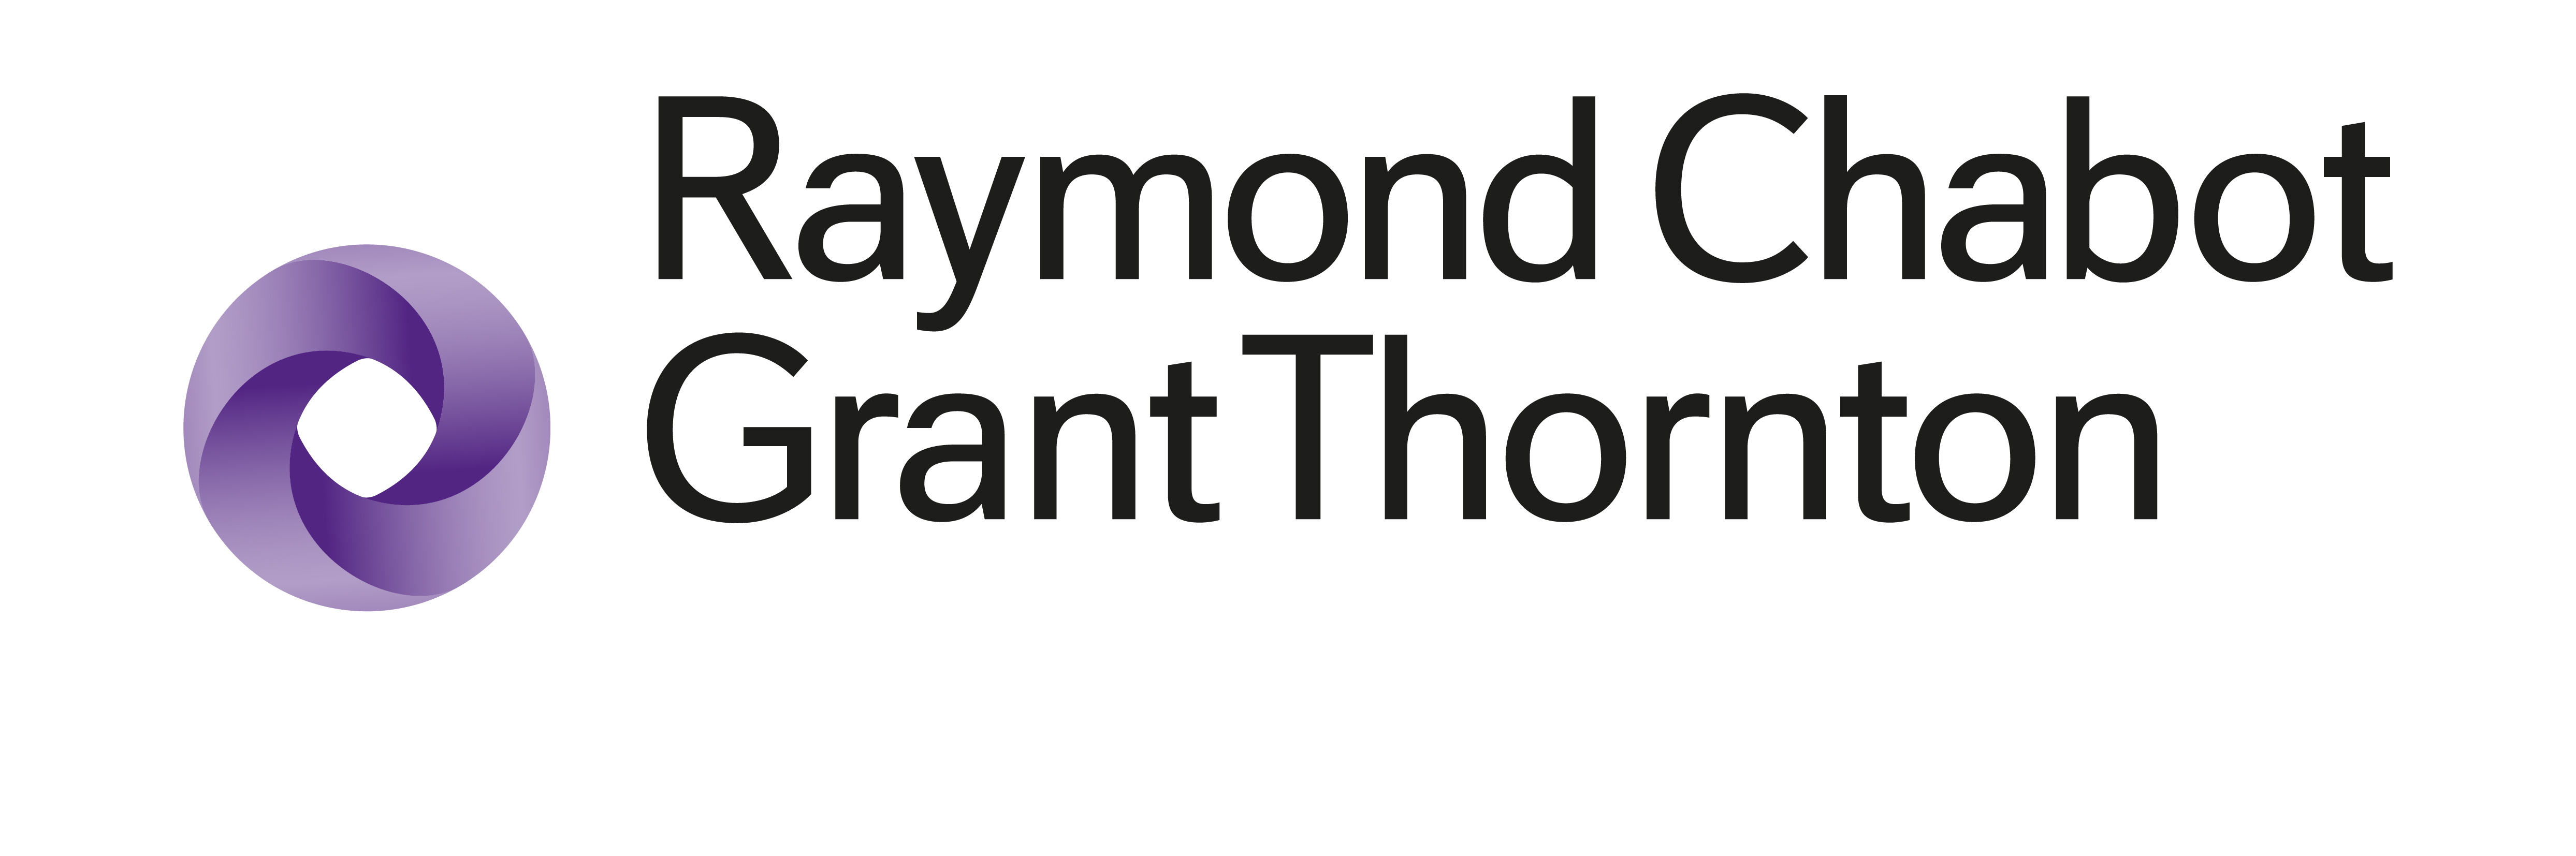 Raymond Chabot Grant Thornton (Acte répréhensible externe)